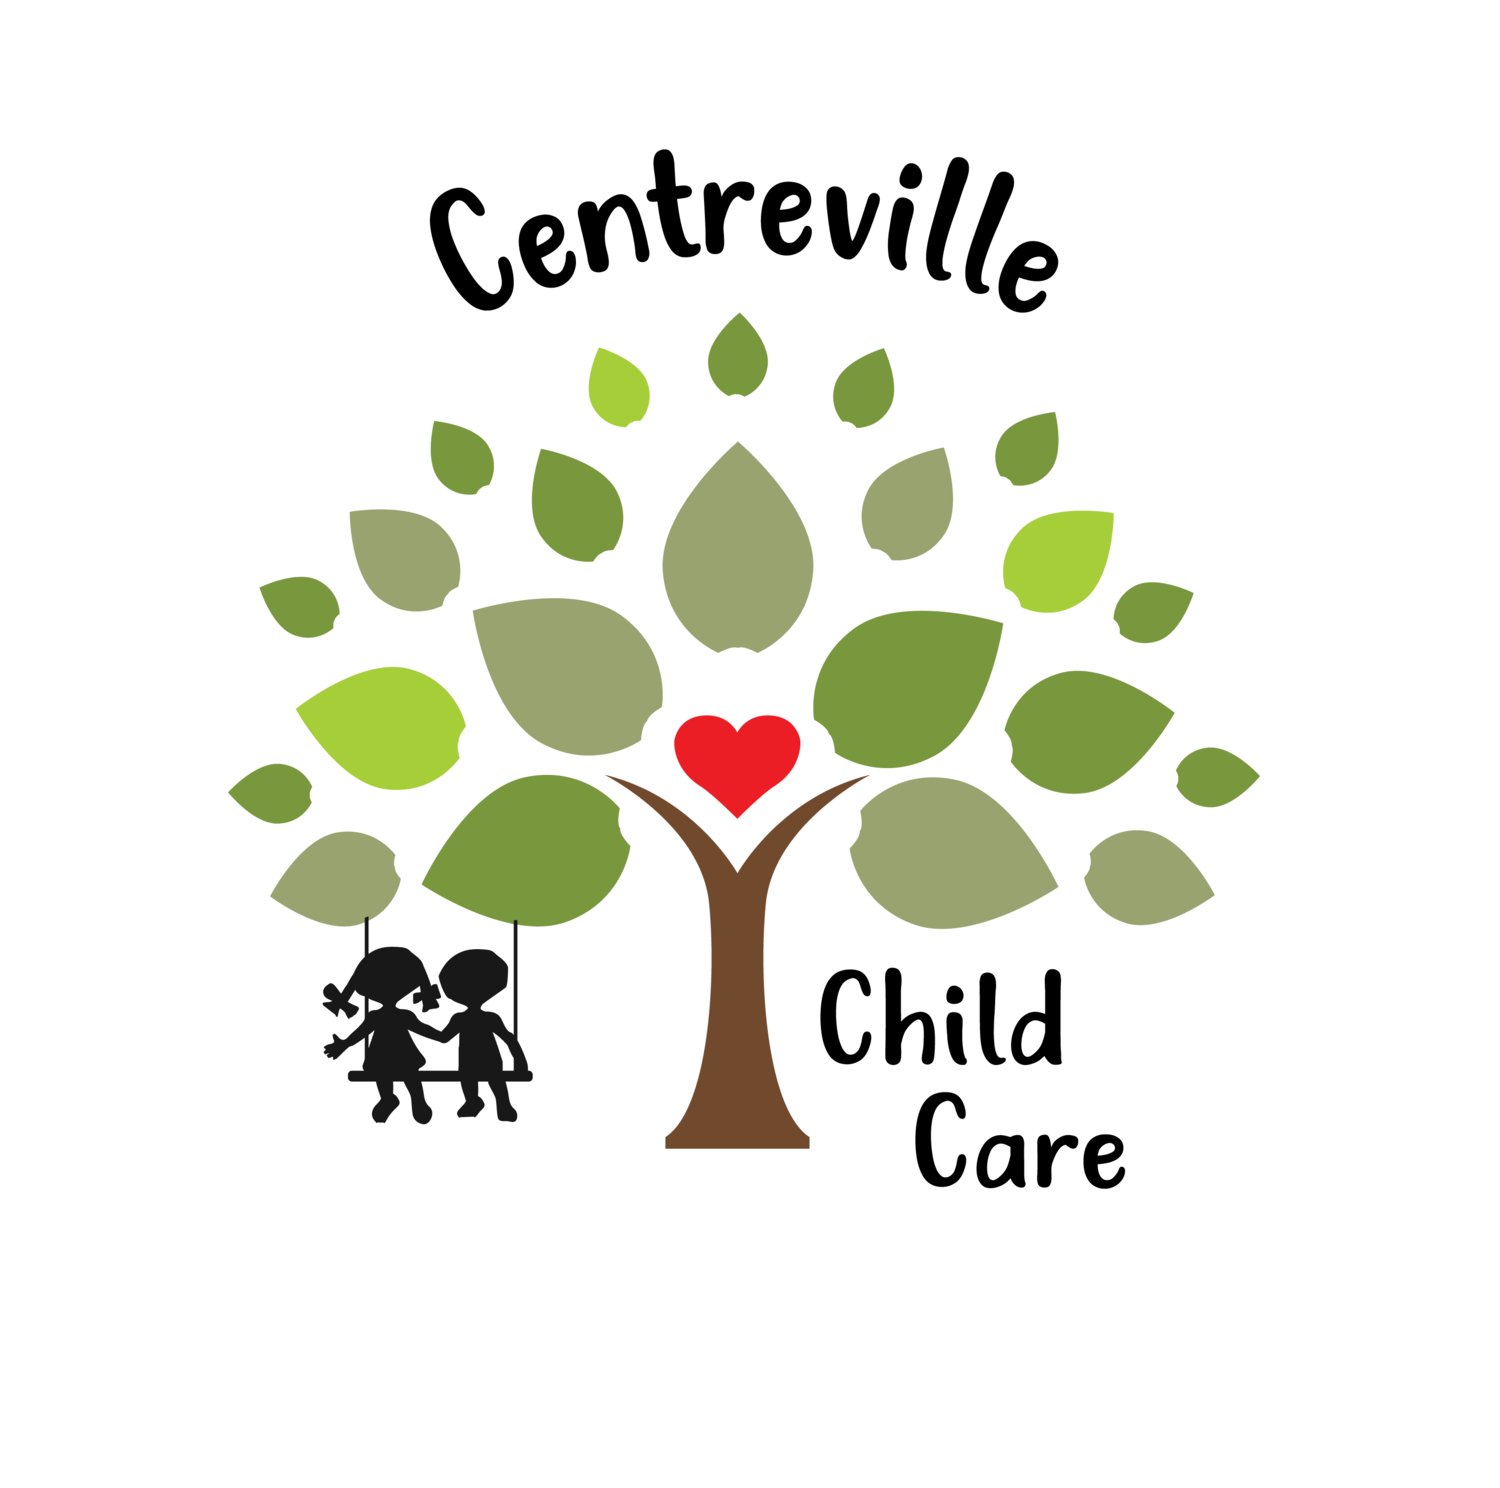 Centreville Child Care